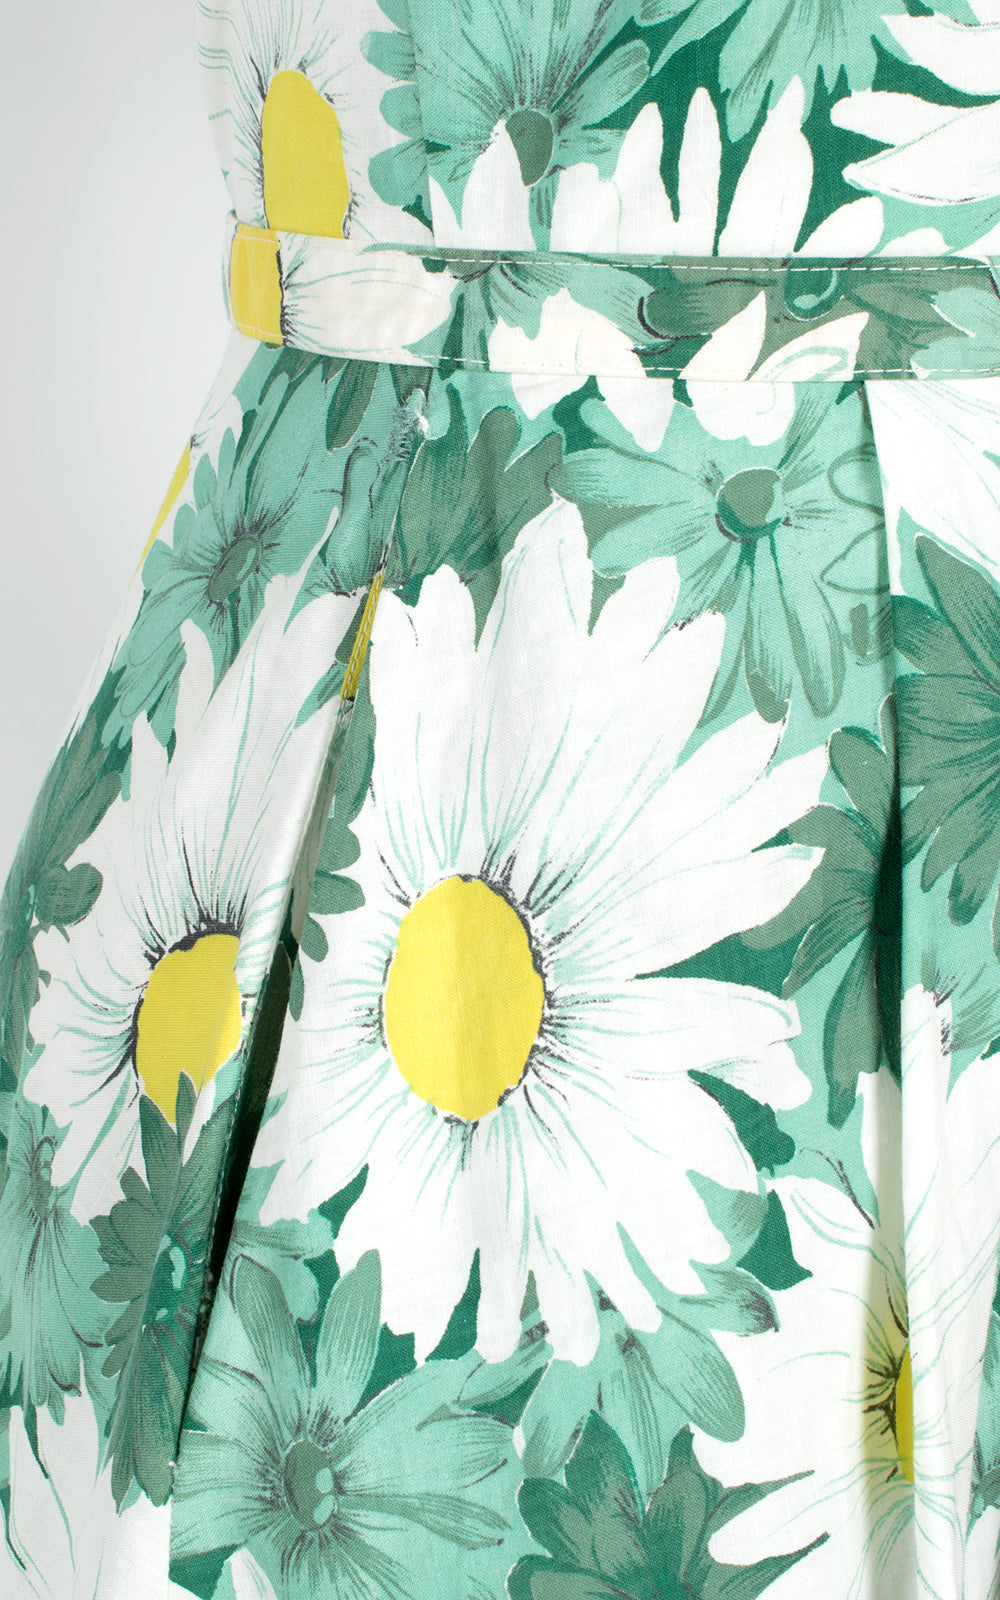 1950s Daisy Printed Cotton Sundress with Rhinestones & Pockets